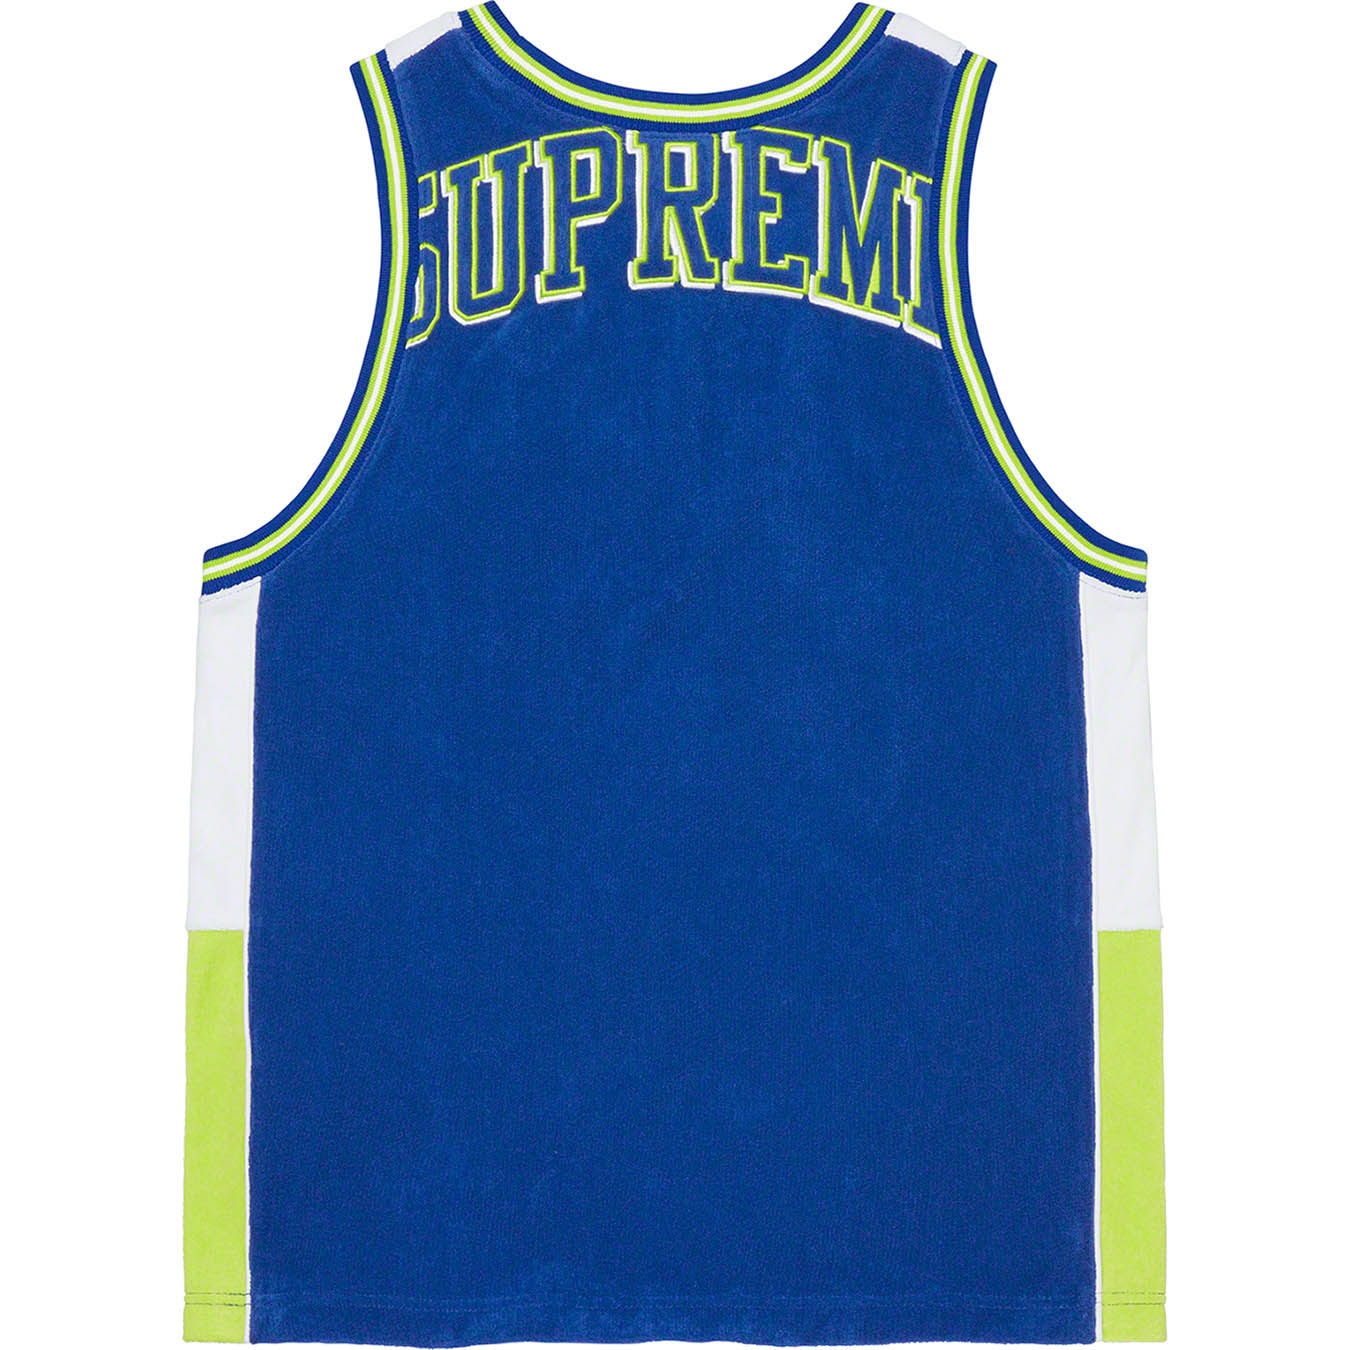 Supreme Terry Basketball Jersey